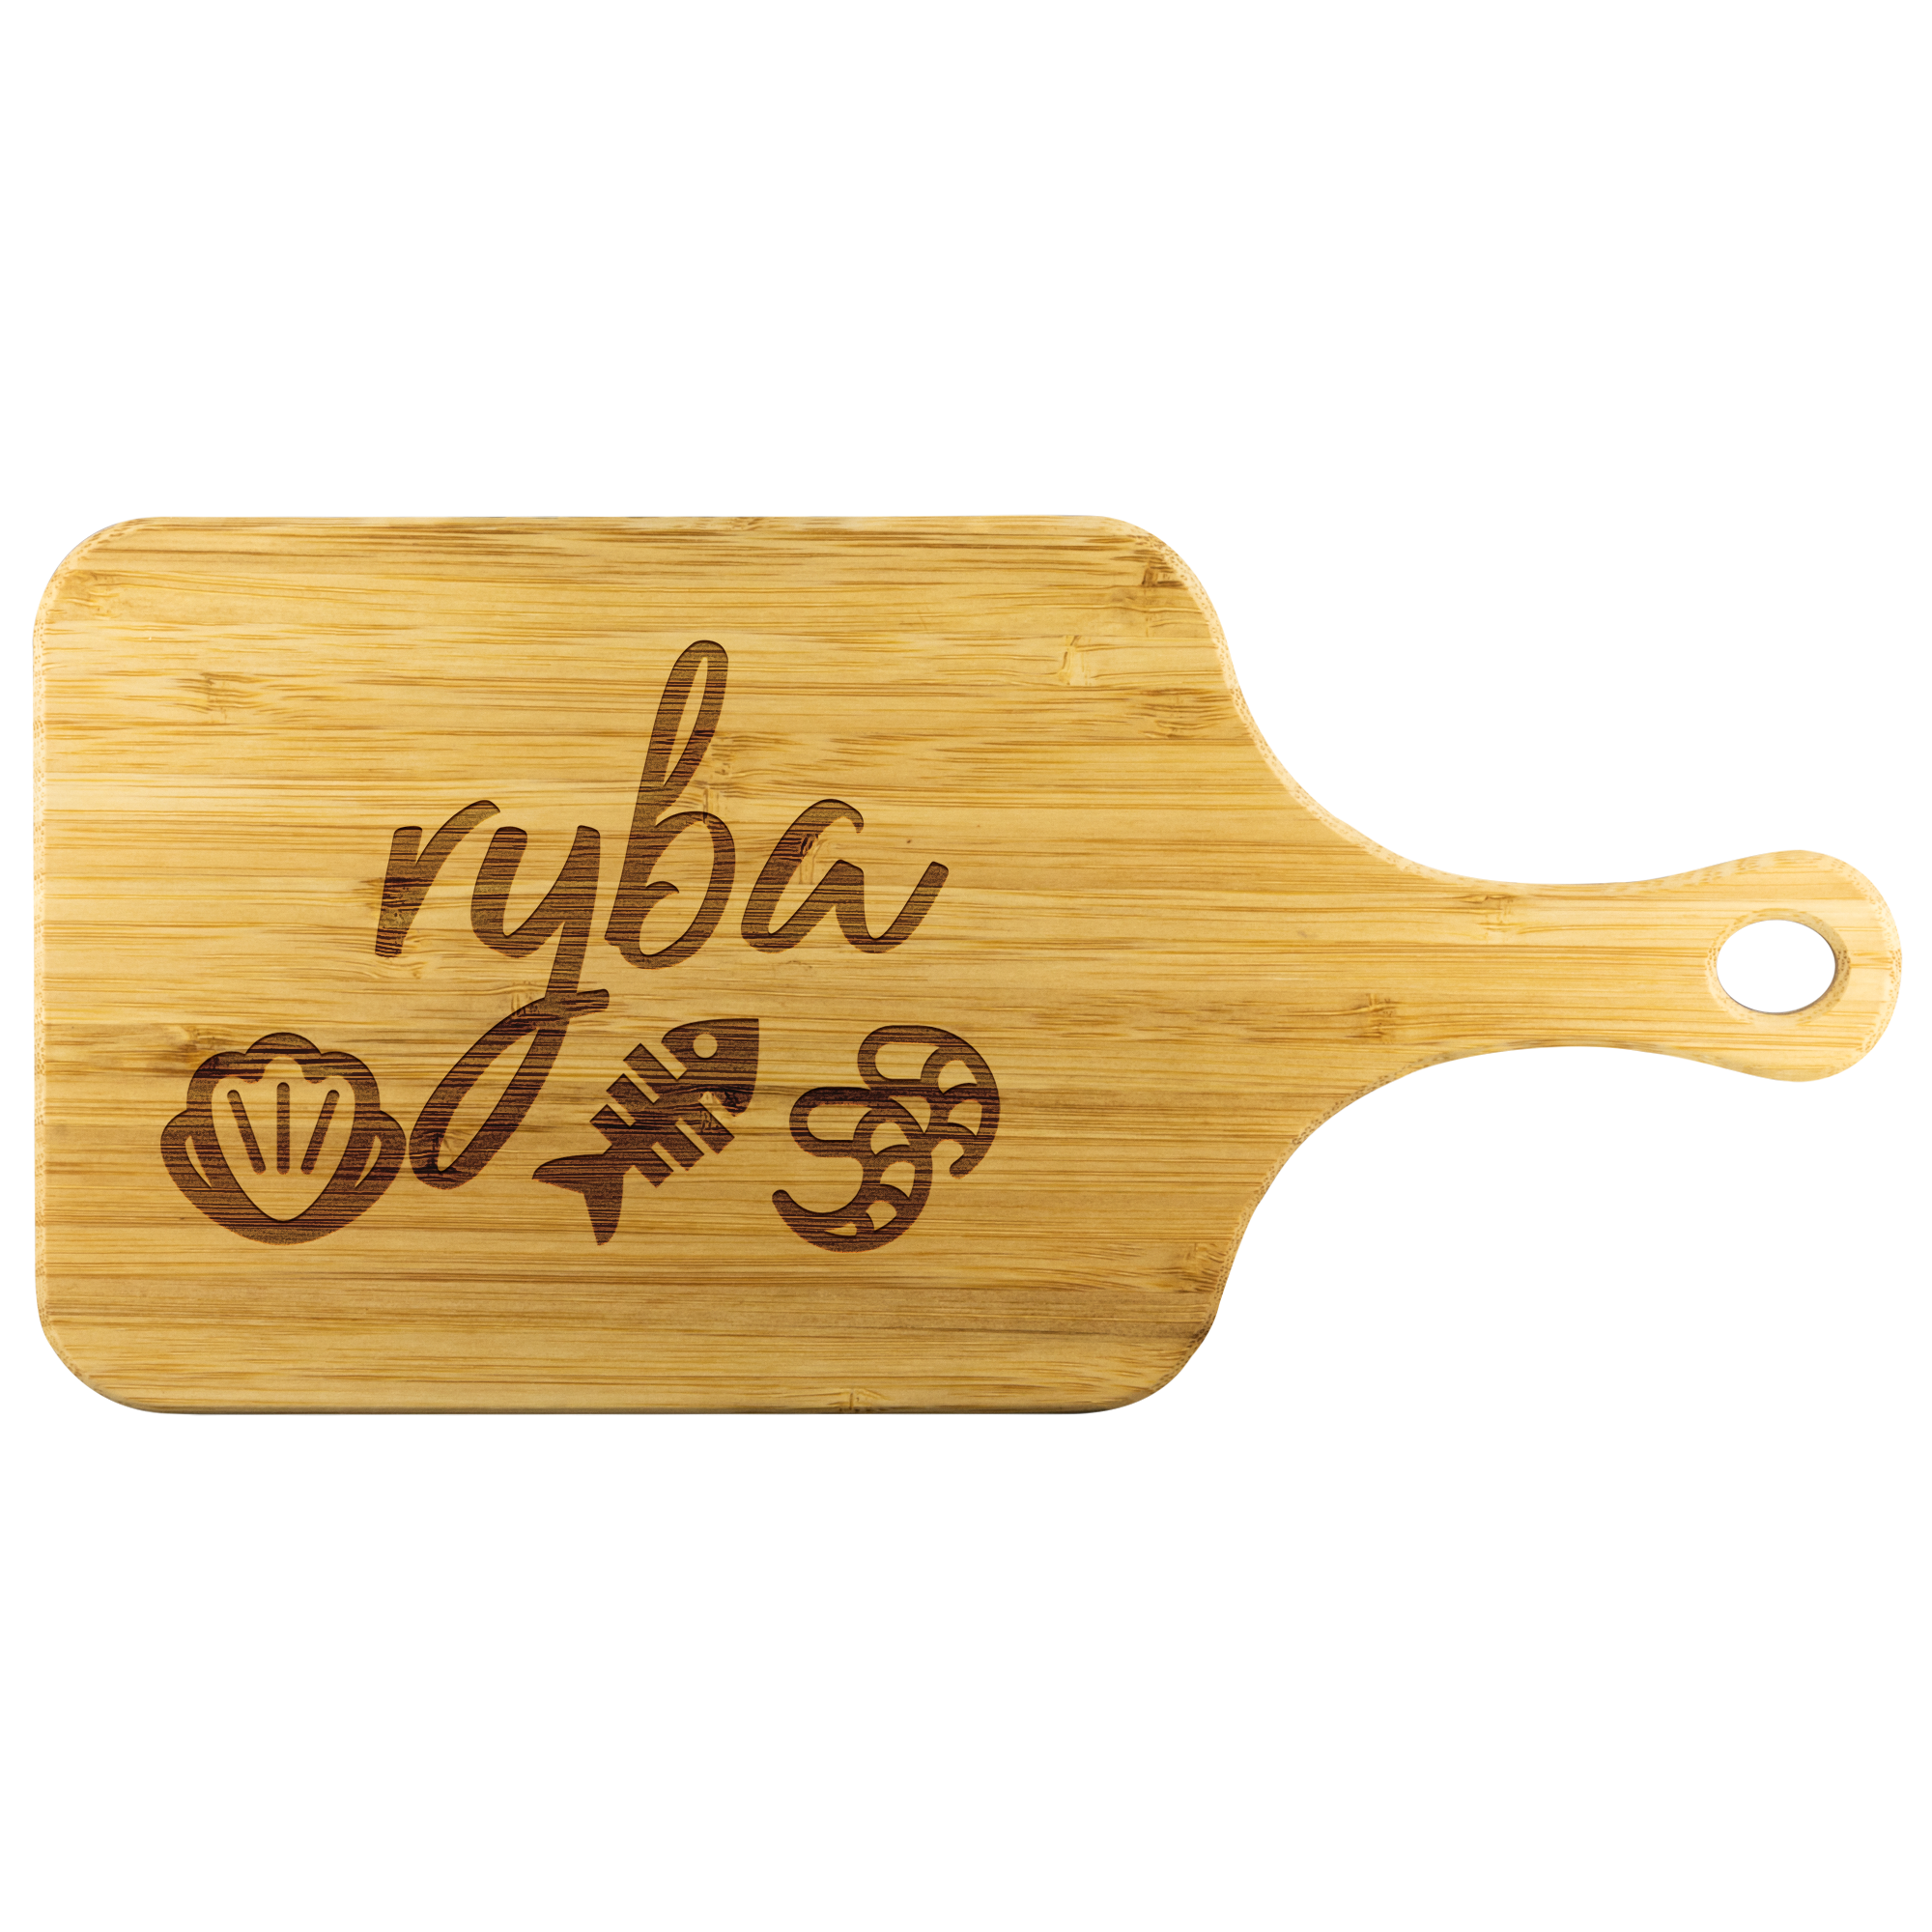 Ryba Fish Cutting Board – My Polish Heritage